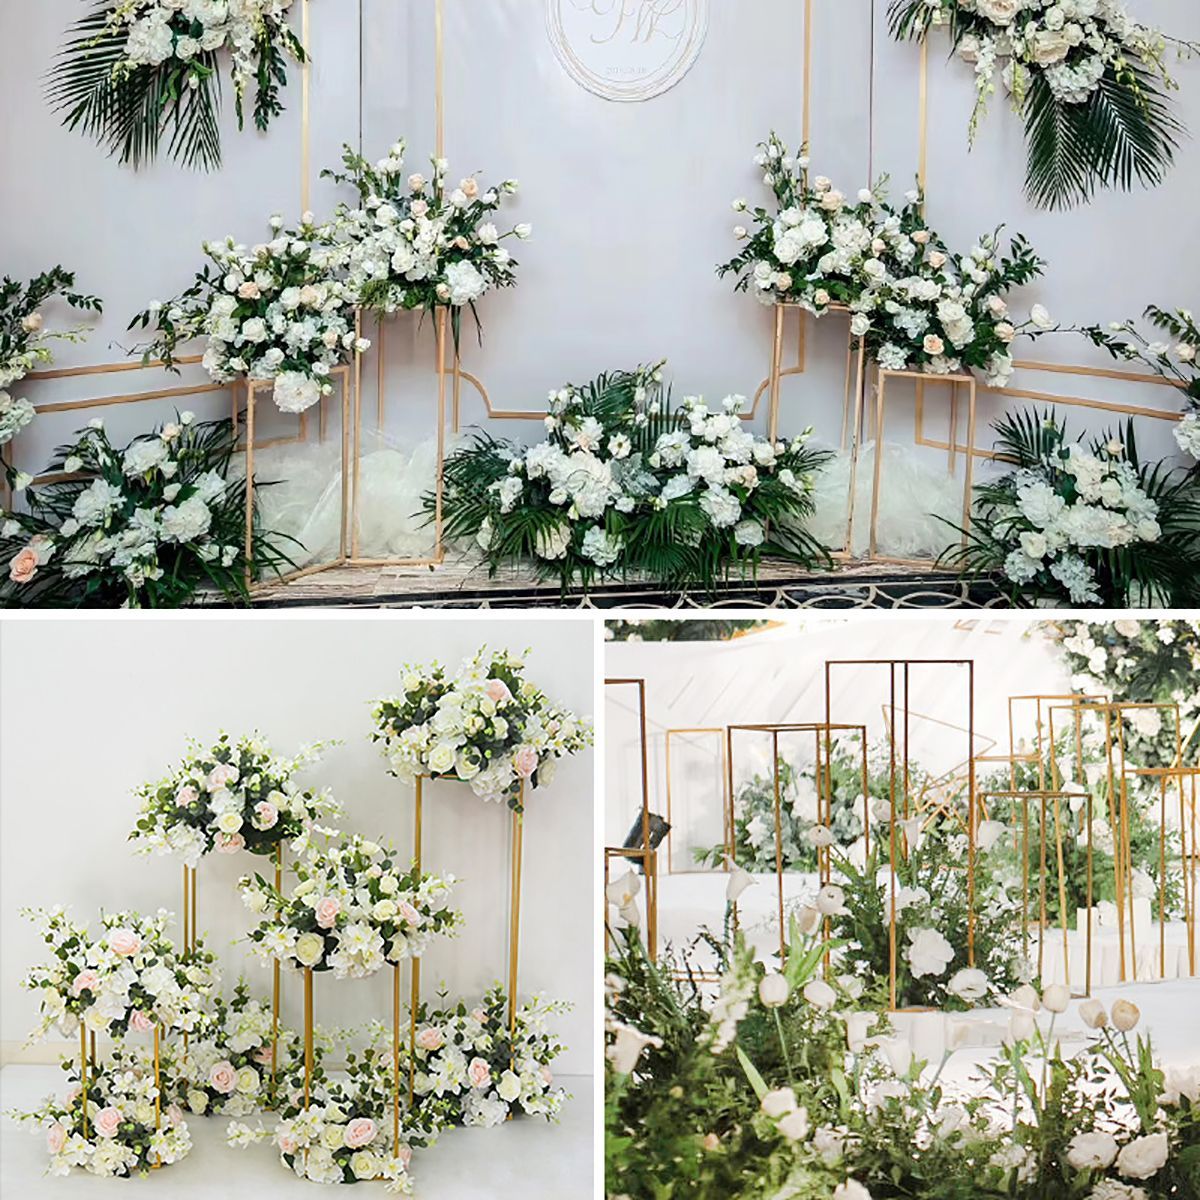 Flower-Rack-Wedding-Metal-Art-Geometric-Column-Vase-Stand-Prop-Party-Detachable-1593823